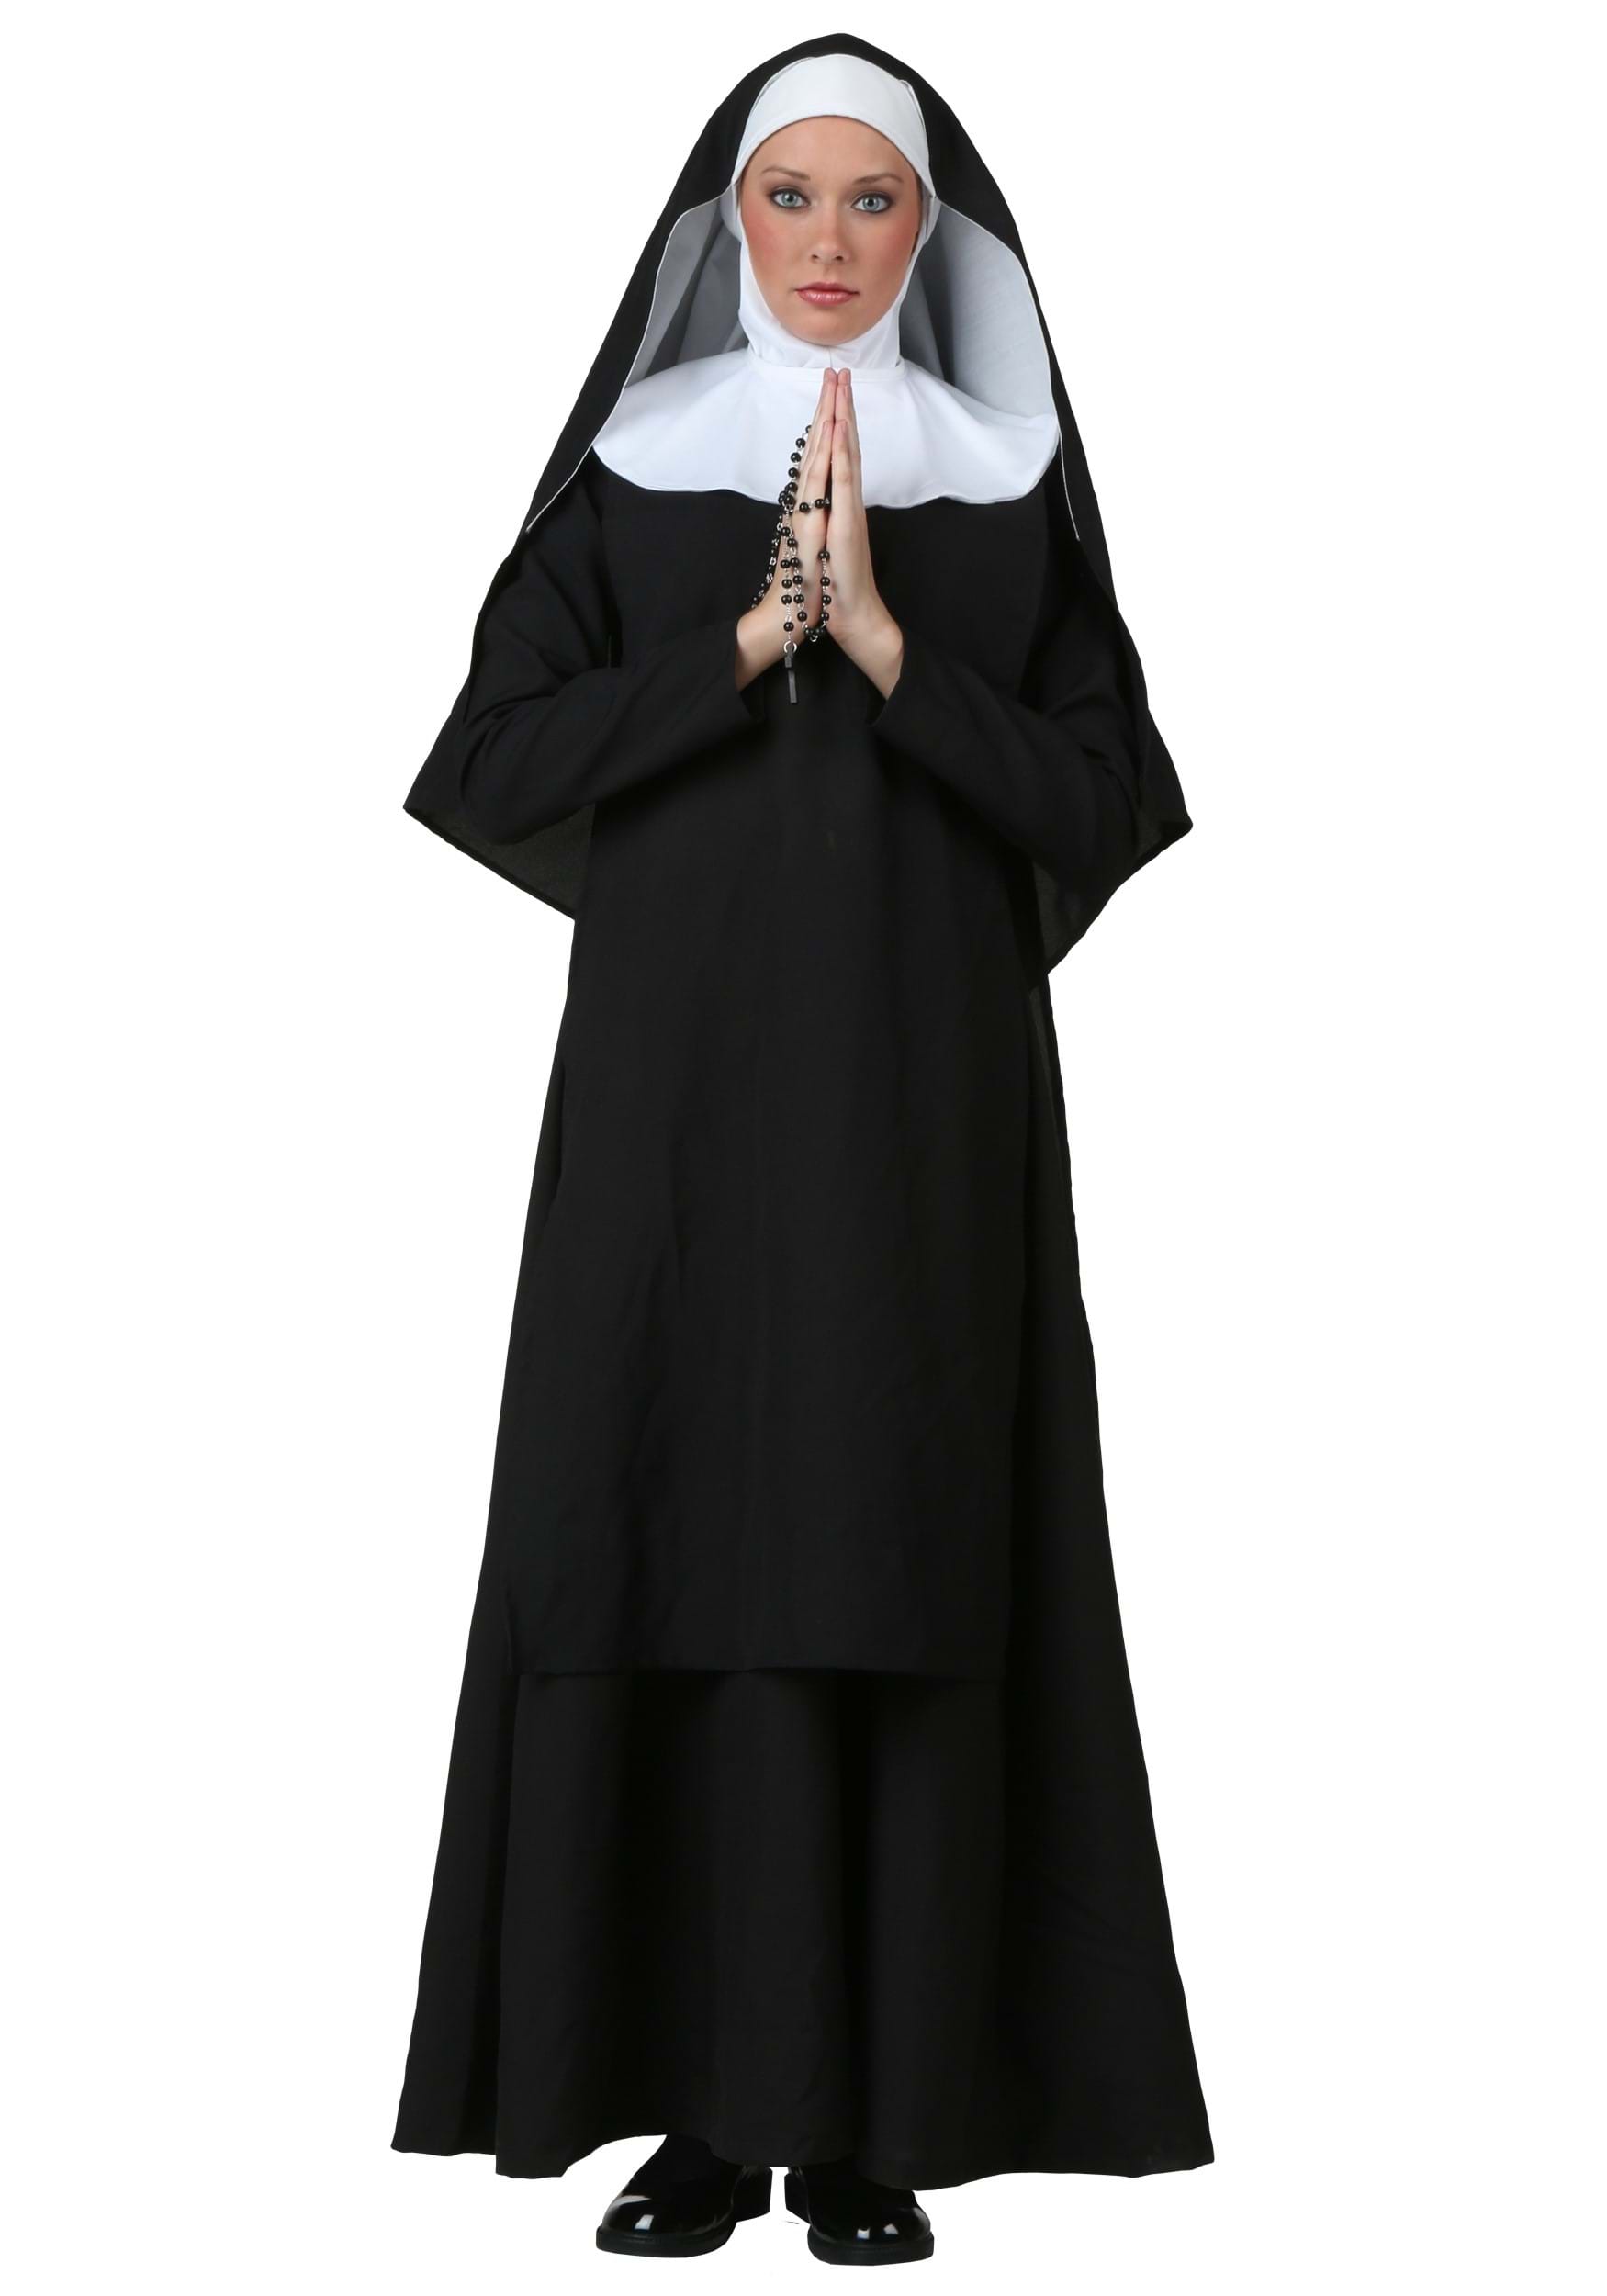 Photos - Fancy Dress Deluxe FUN Costumes  Women's Nun Costume | Adult Religious Costumes Black 